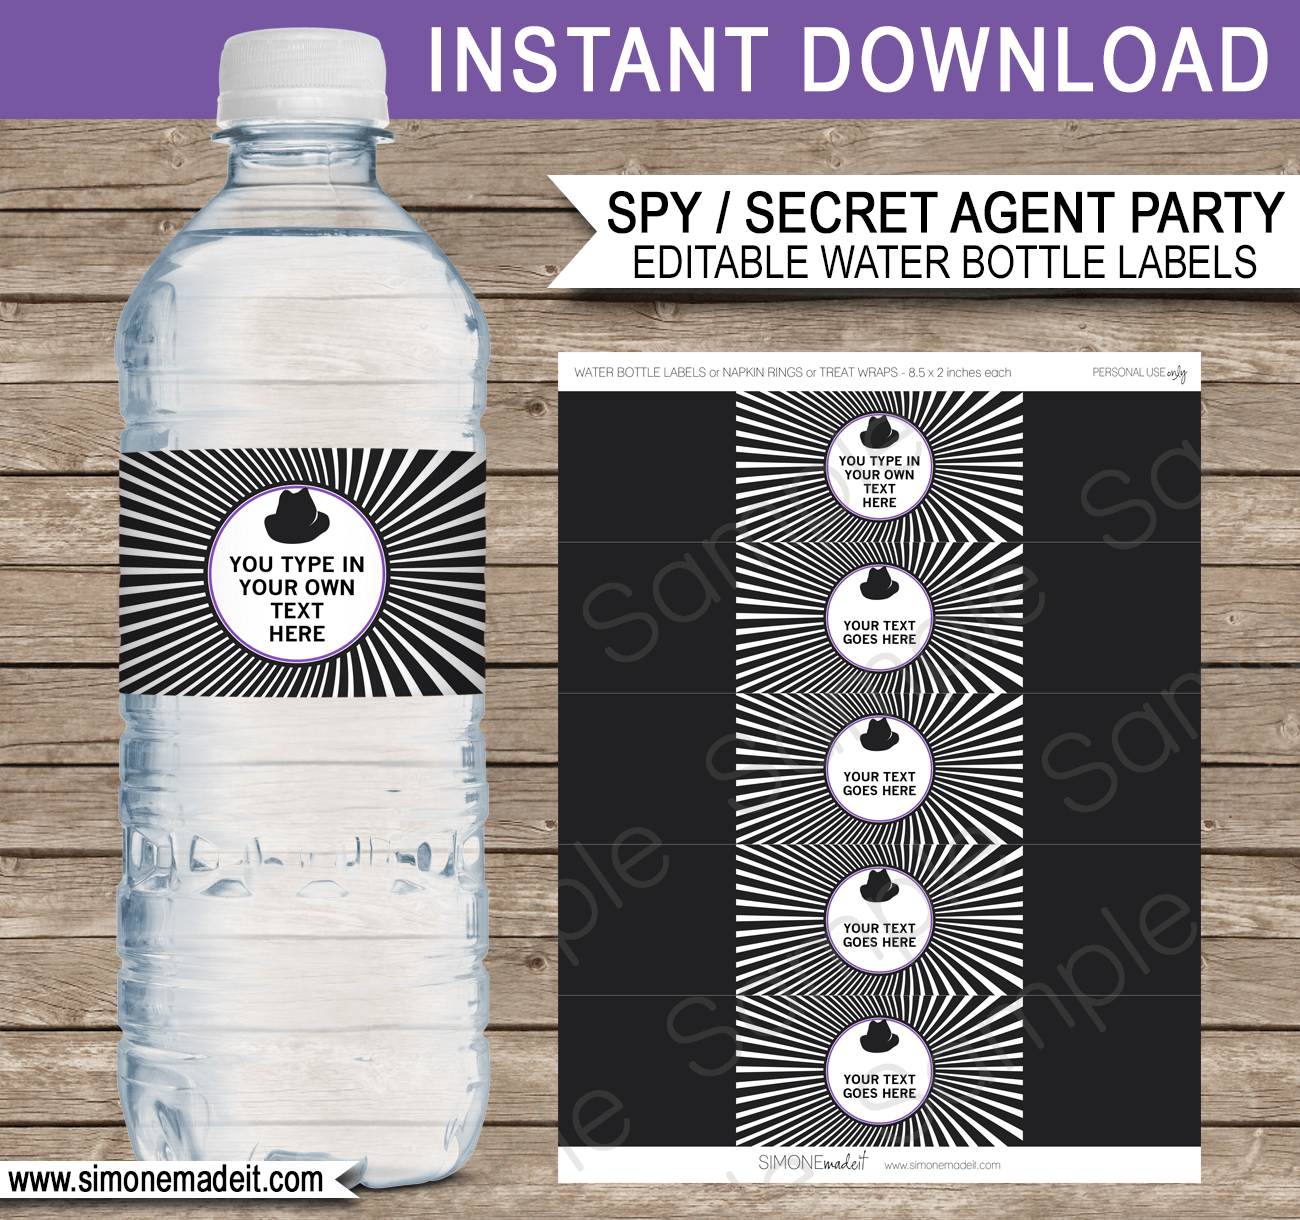 Girls Spy Party Water Bottle Labels | Secret Agent Birthday Party | DIY Editable & Printable Template | $3.00 INSTANT DOWNLOAD via SIMONEmadeit.com